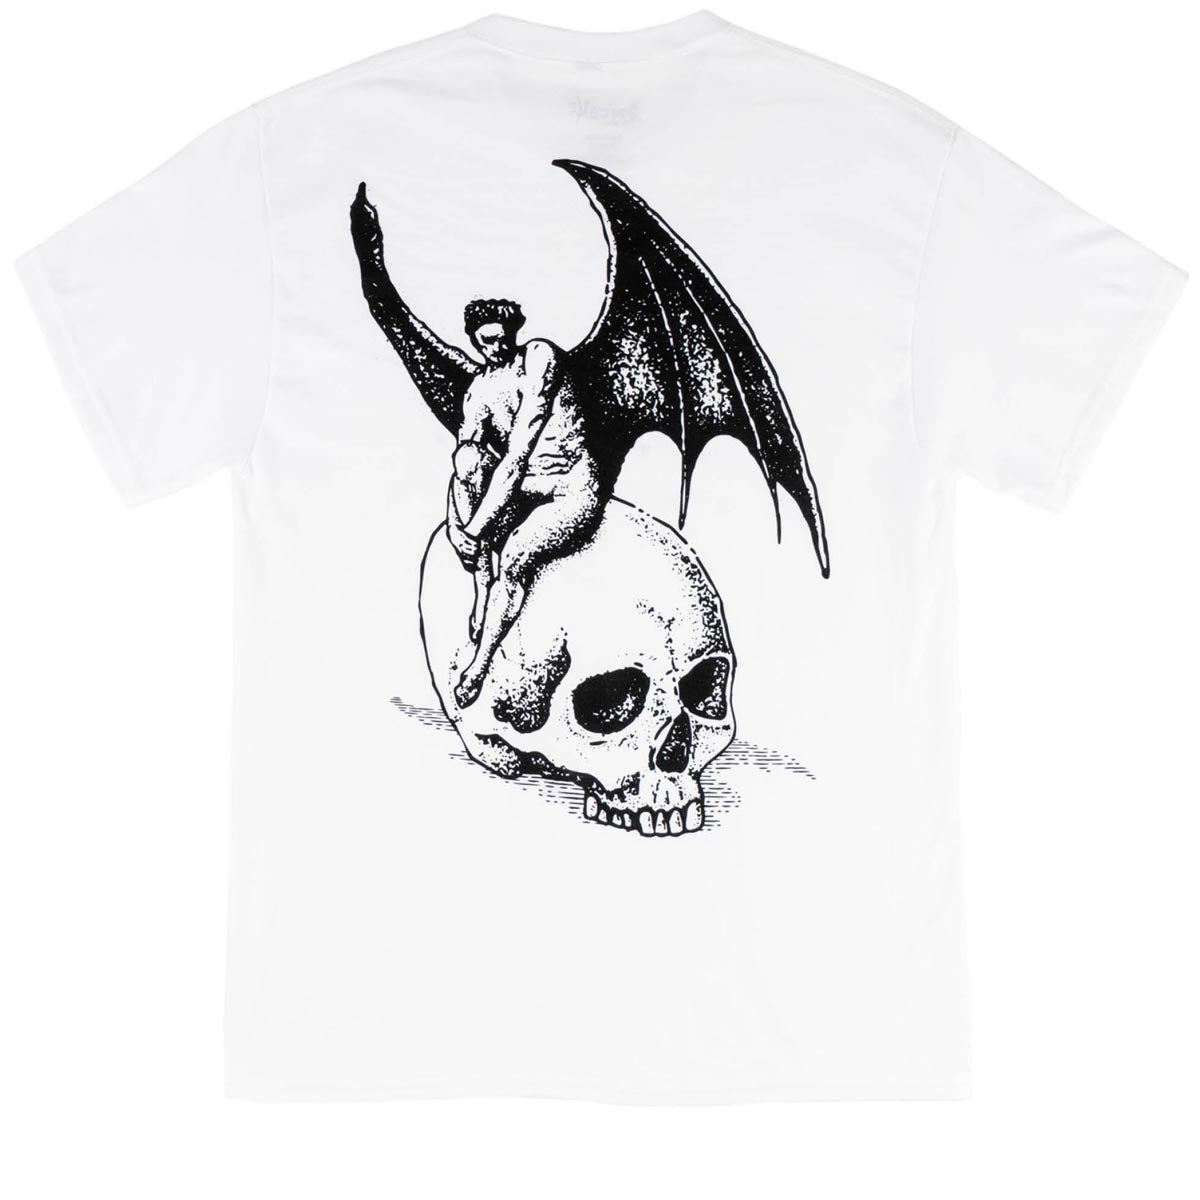 Welcome Nephilim T-Shirt - White/Black image 1